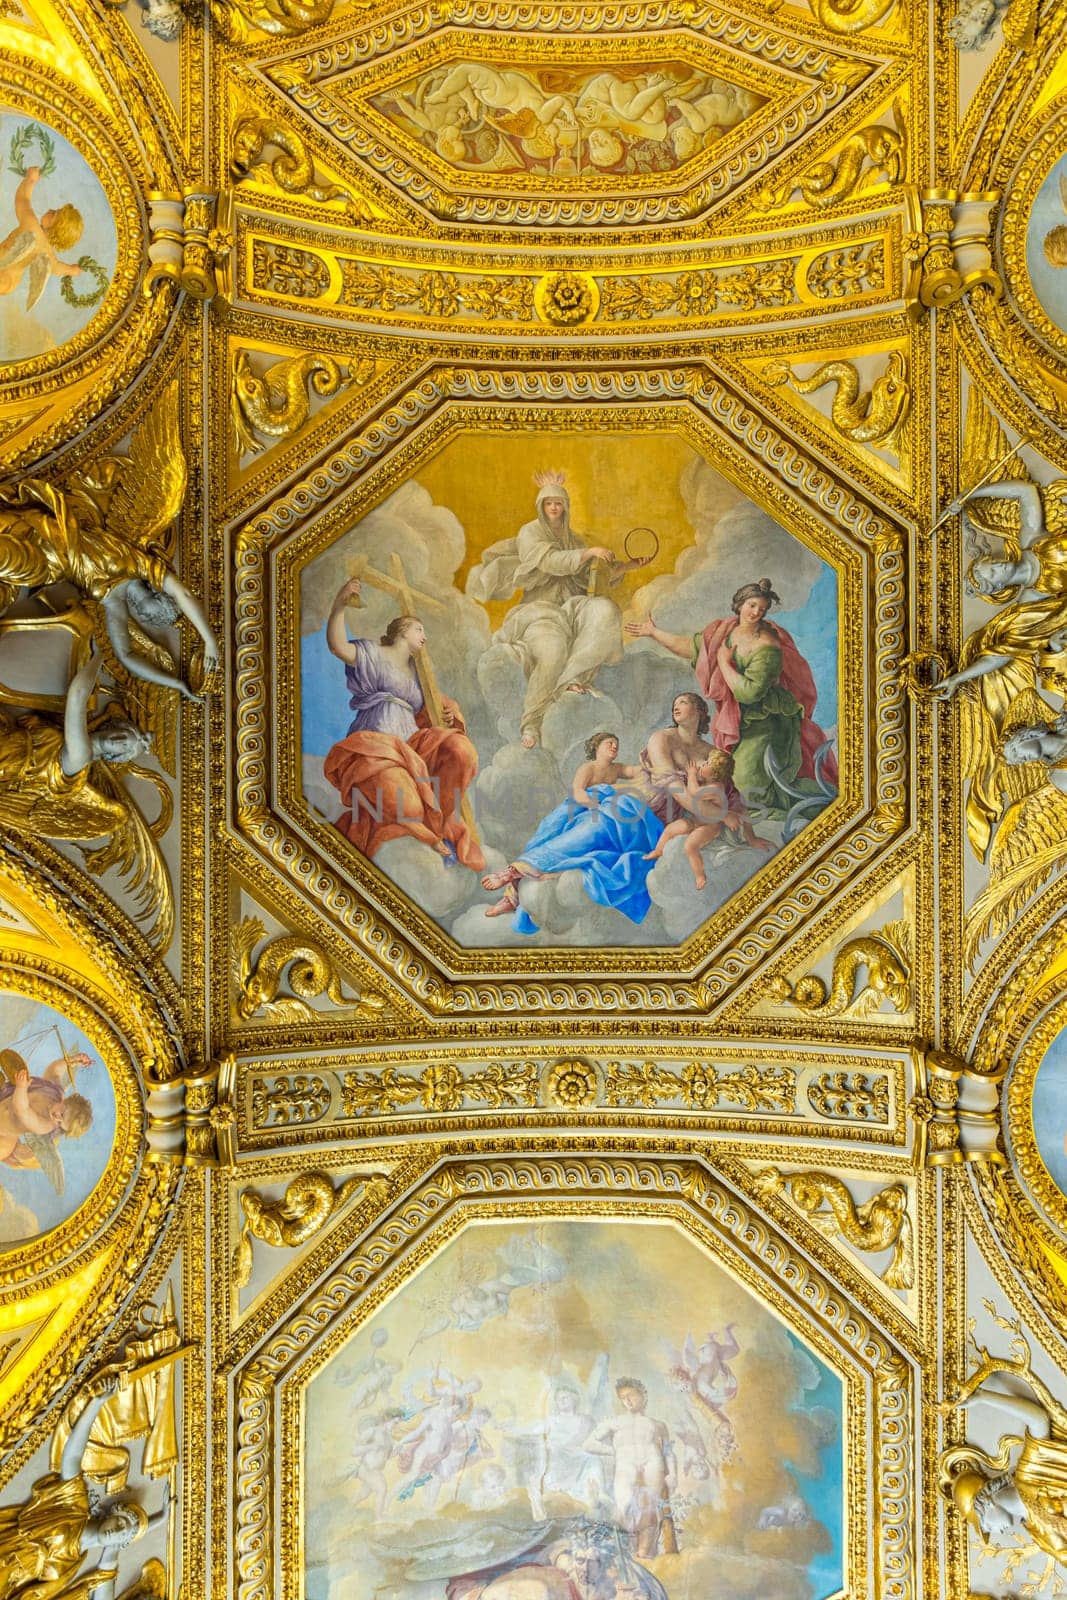 Paris, France - July 6, 2018: Louvre Museum, Paris, France. Luxury ceiling on Louvre Museum. View the beauty of Louvre ceiling in the Louvre, one of the most visited museums in the world. Paris.